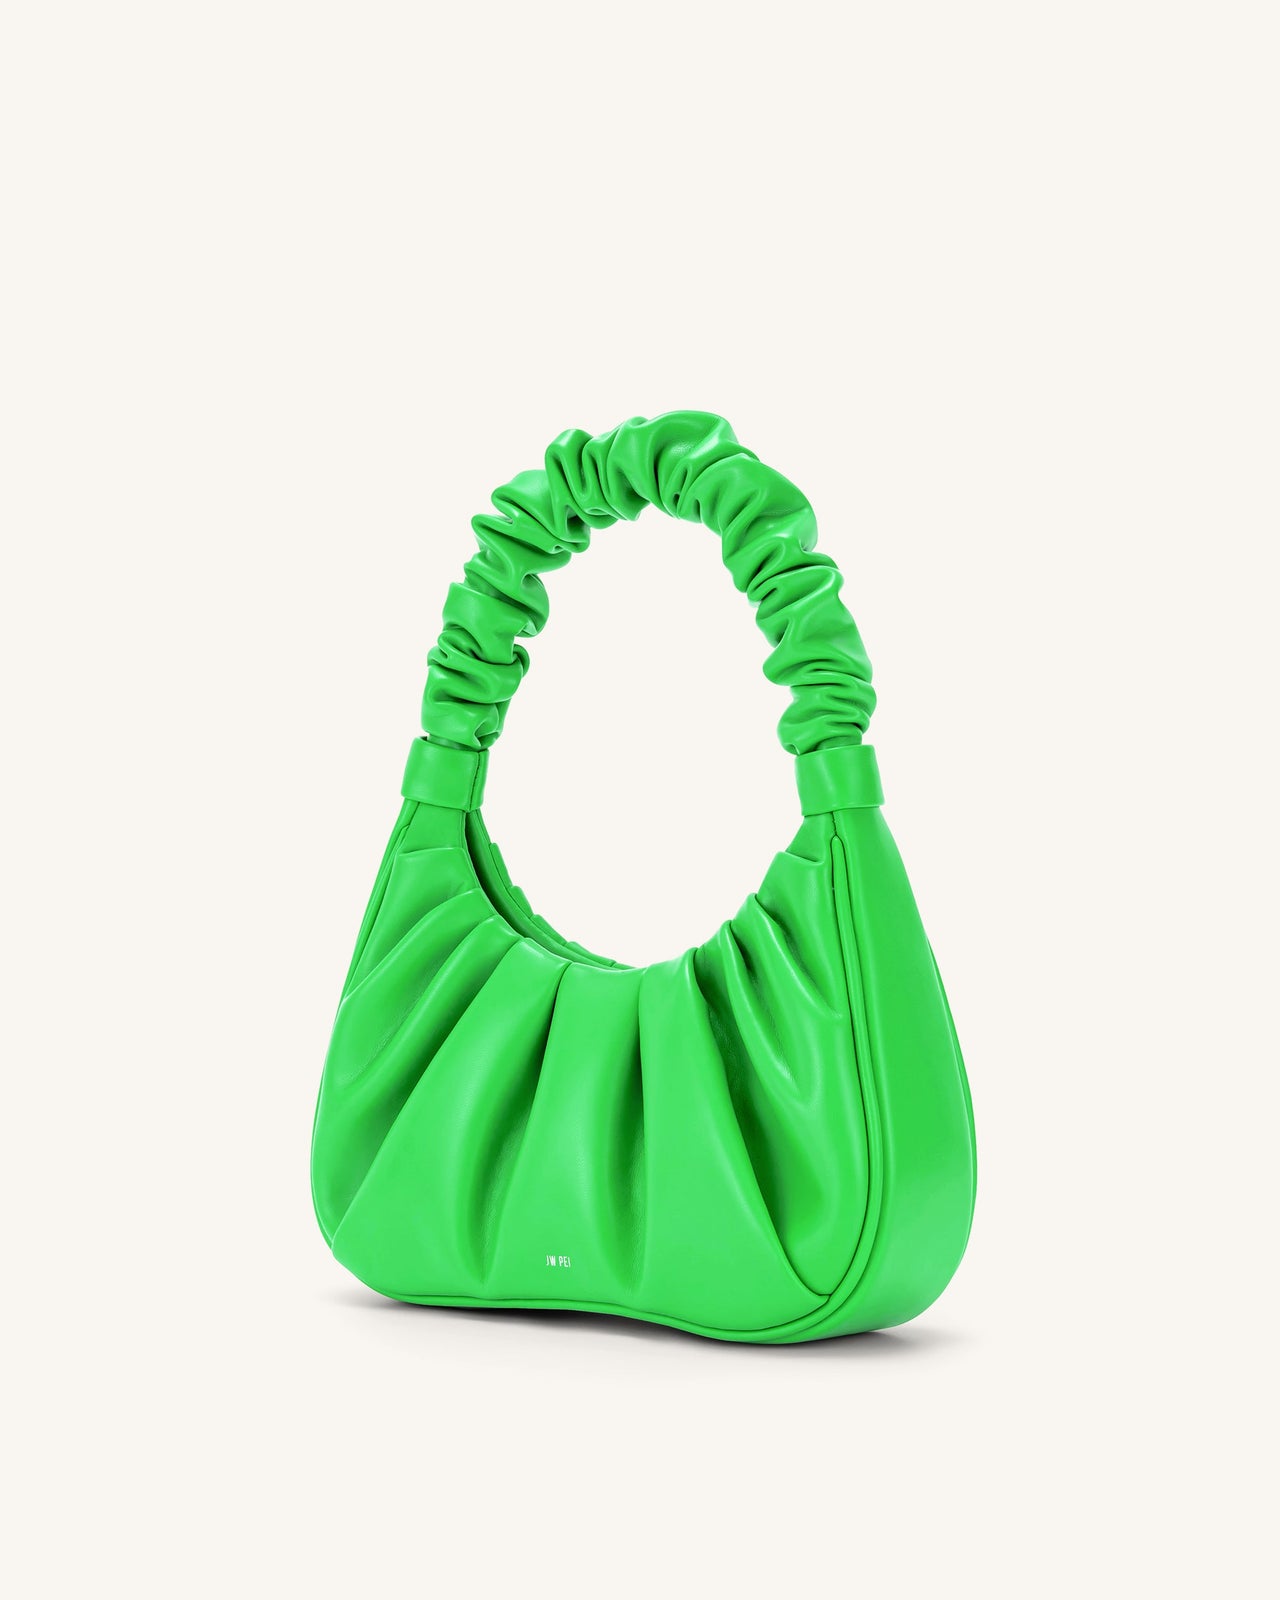 JW PEI Damen Gabbi geraffte Hobo Handtasche - Neon Grün